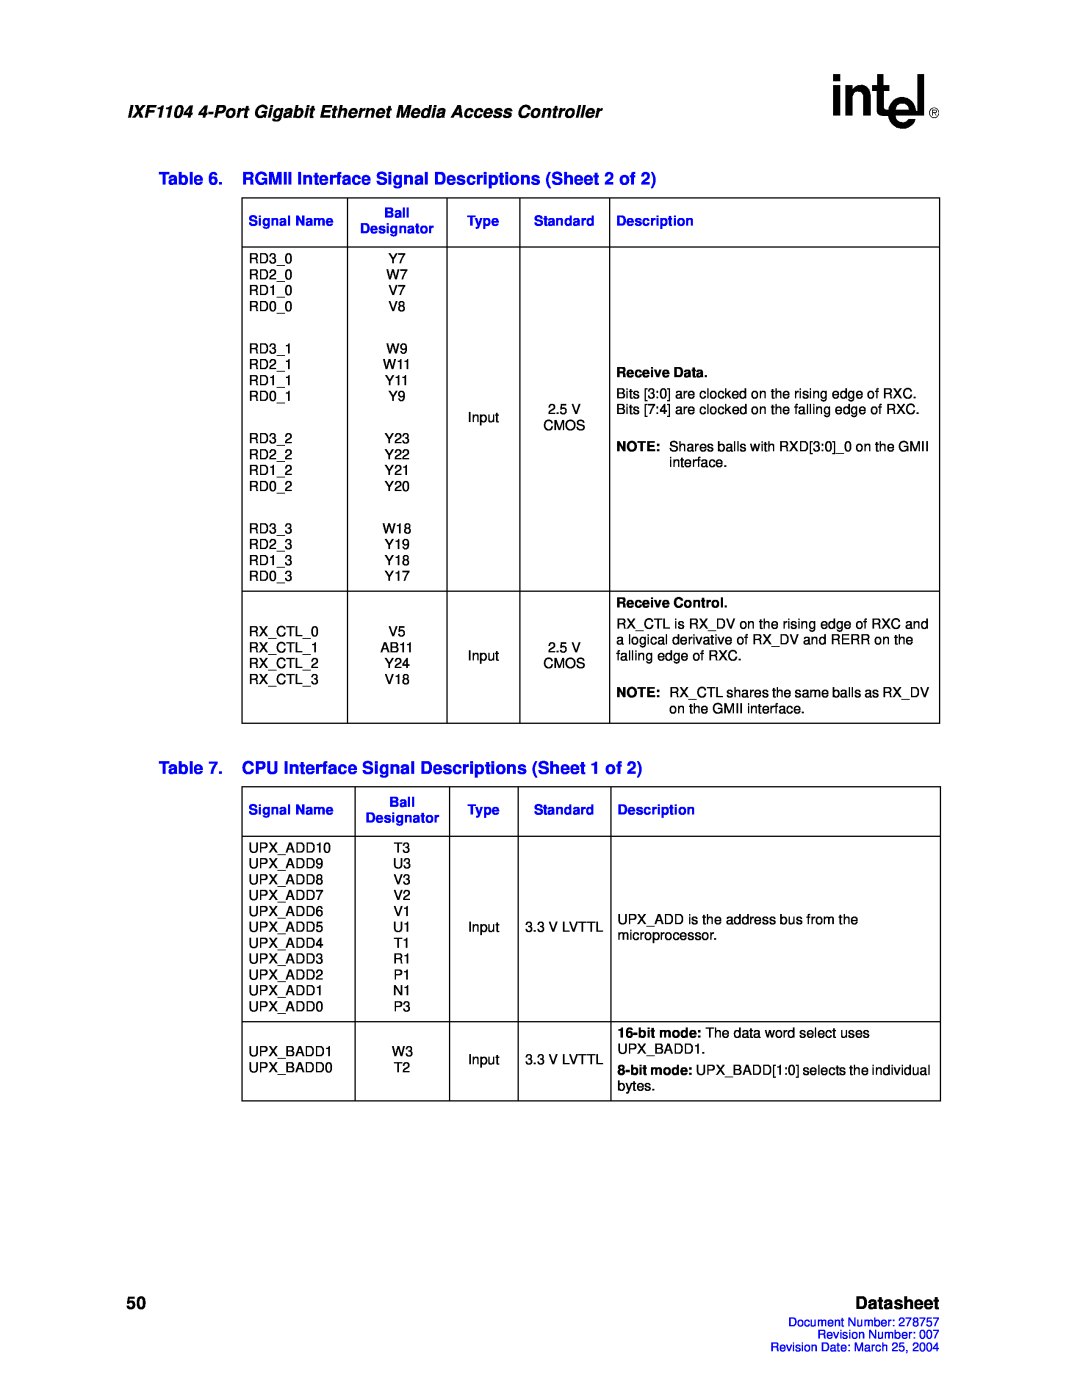 Intel IXF1104 manual Datasheet, Receive Data, Receive Control 